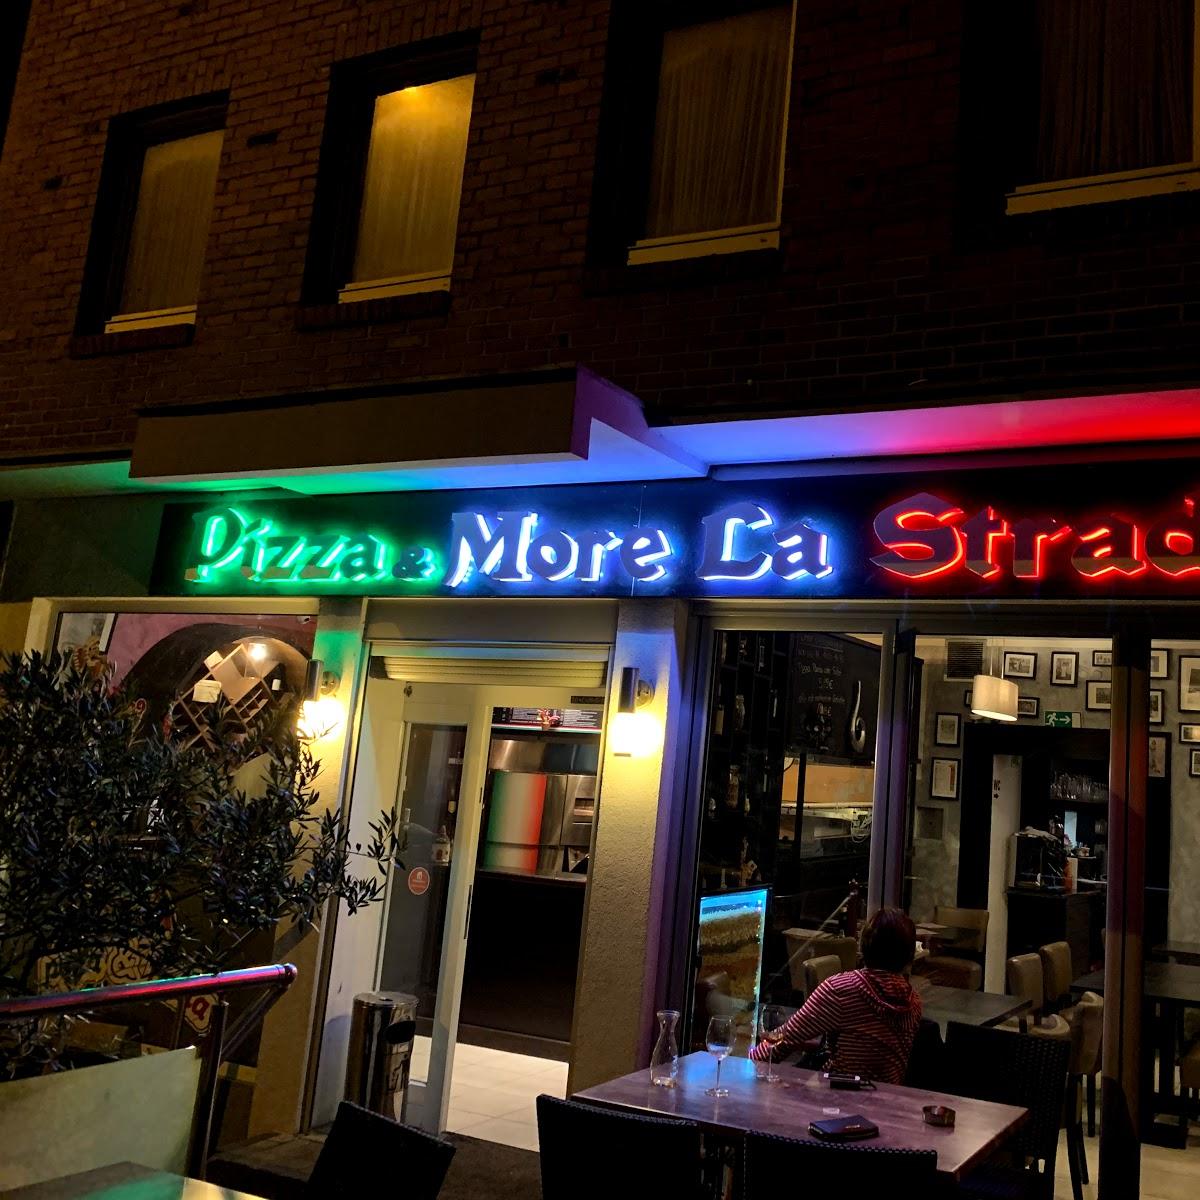 Restaurant "La Strada" in Aachen